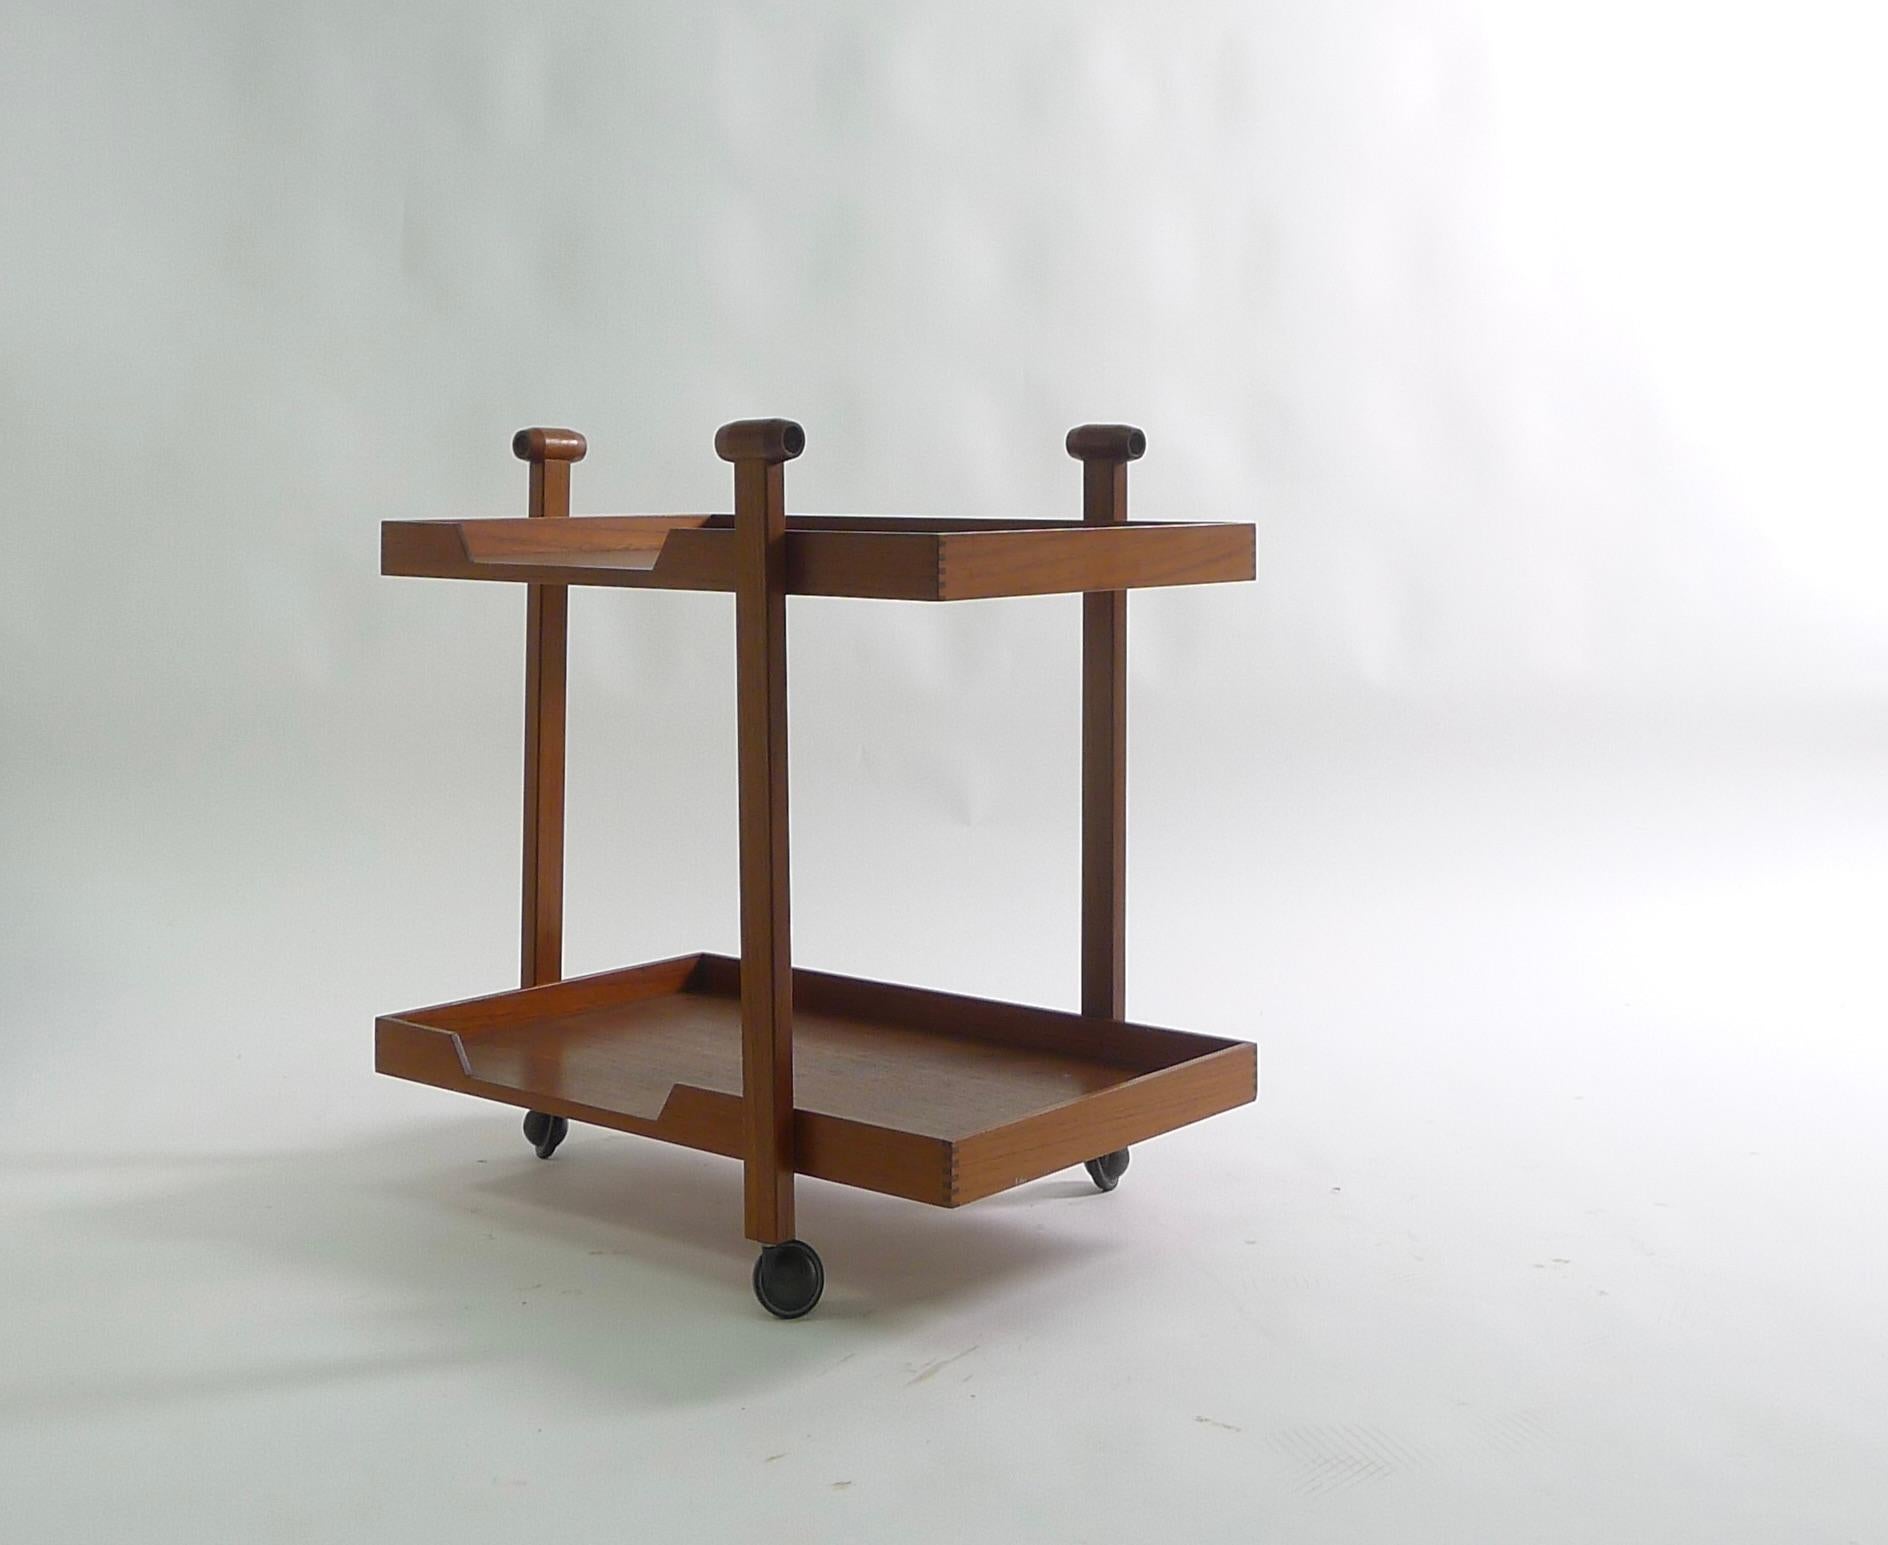 Italian Franco Albini and Franca Helg, Model CR20 Teak Serving Table, Design, 1958